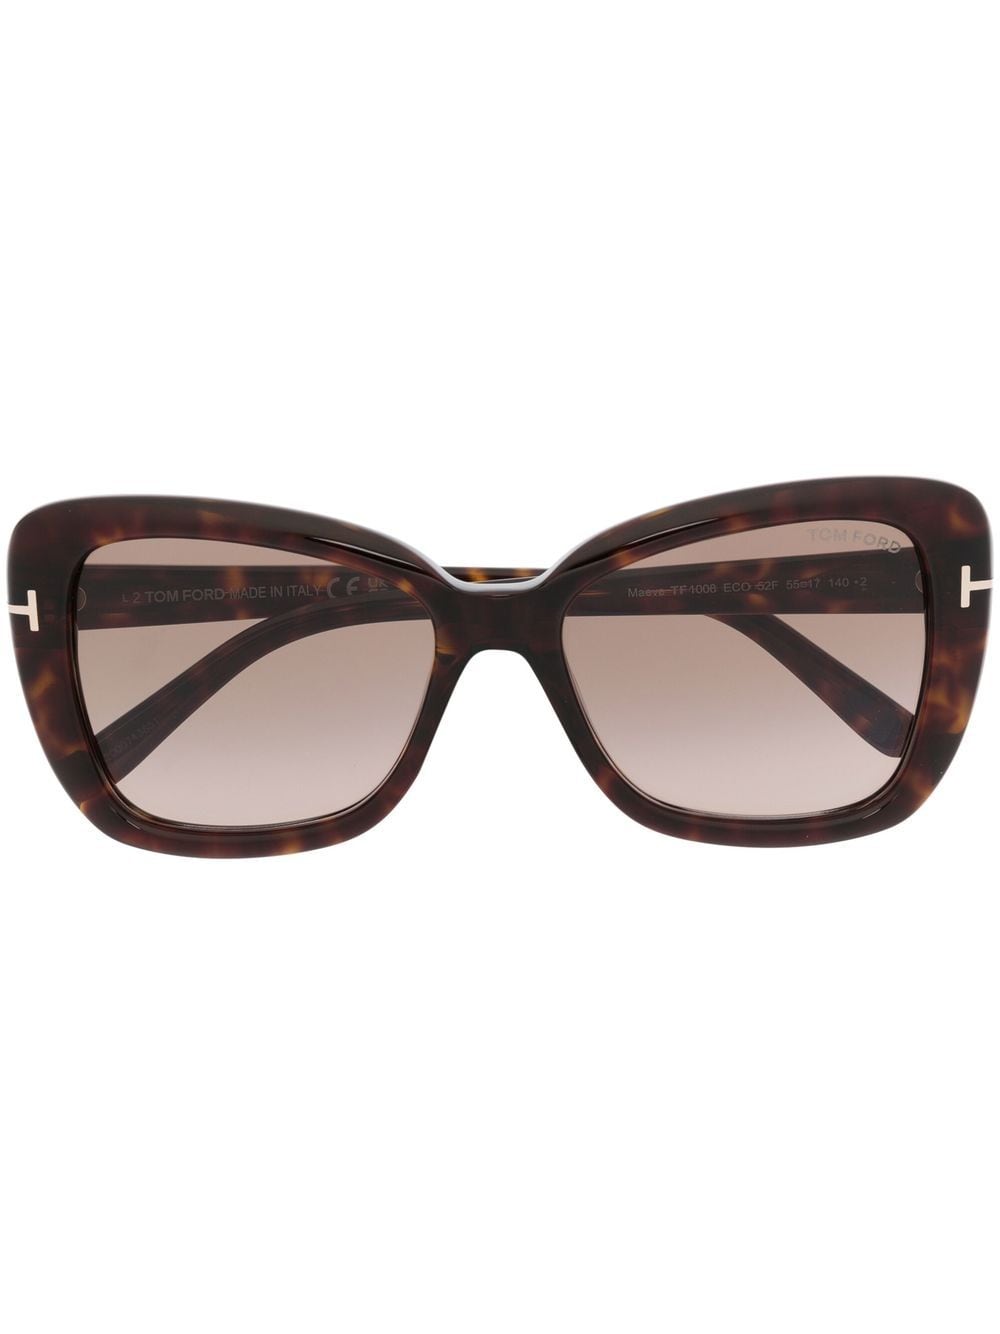 TOM FORD Eyewear tortoiseshell-effect sunglasses - Brown von TOM FORD Eyewear